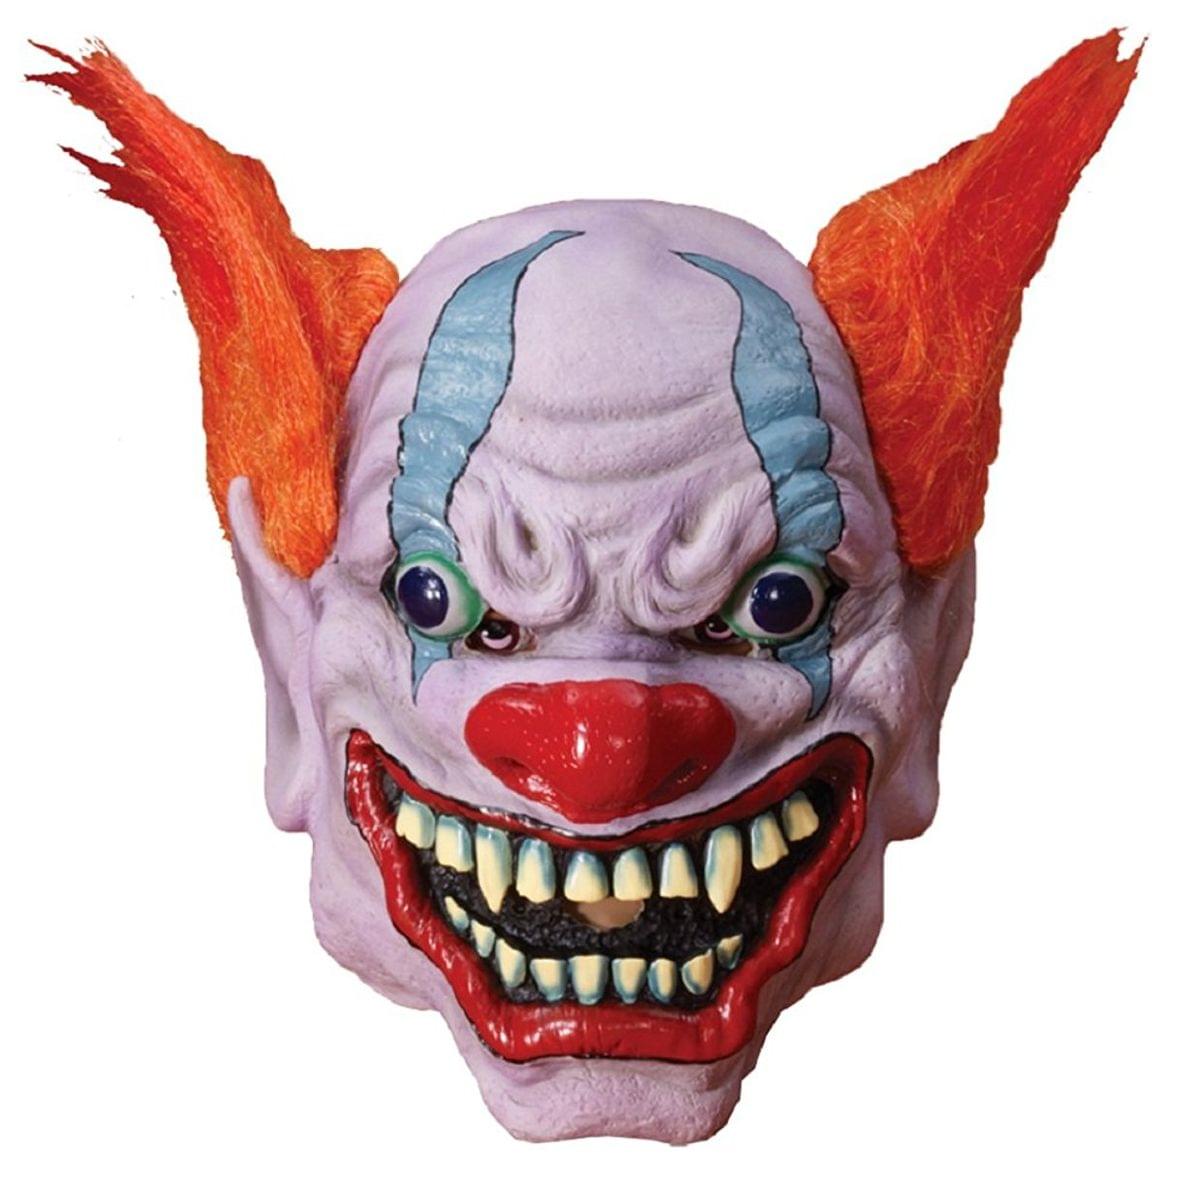 Berzerk The Clown Mask Costume Accessory